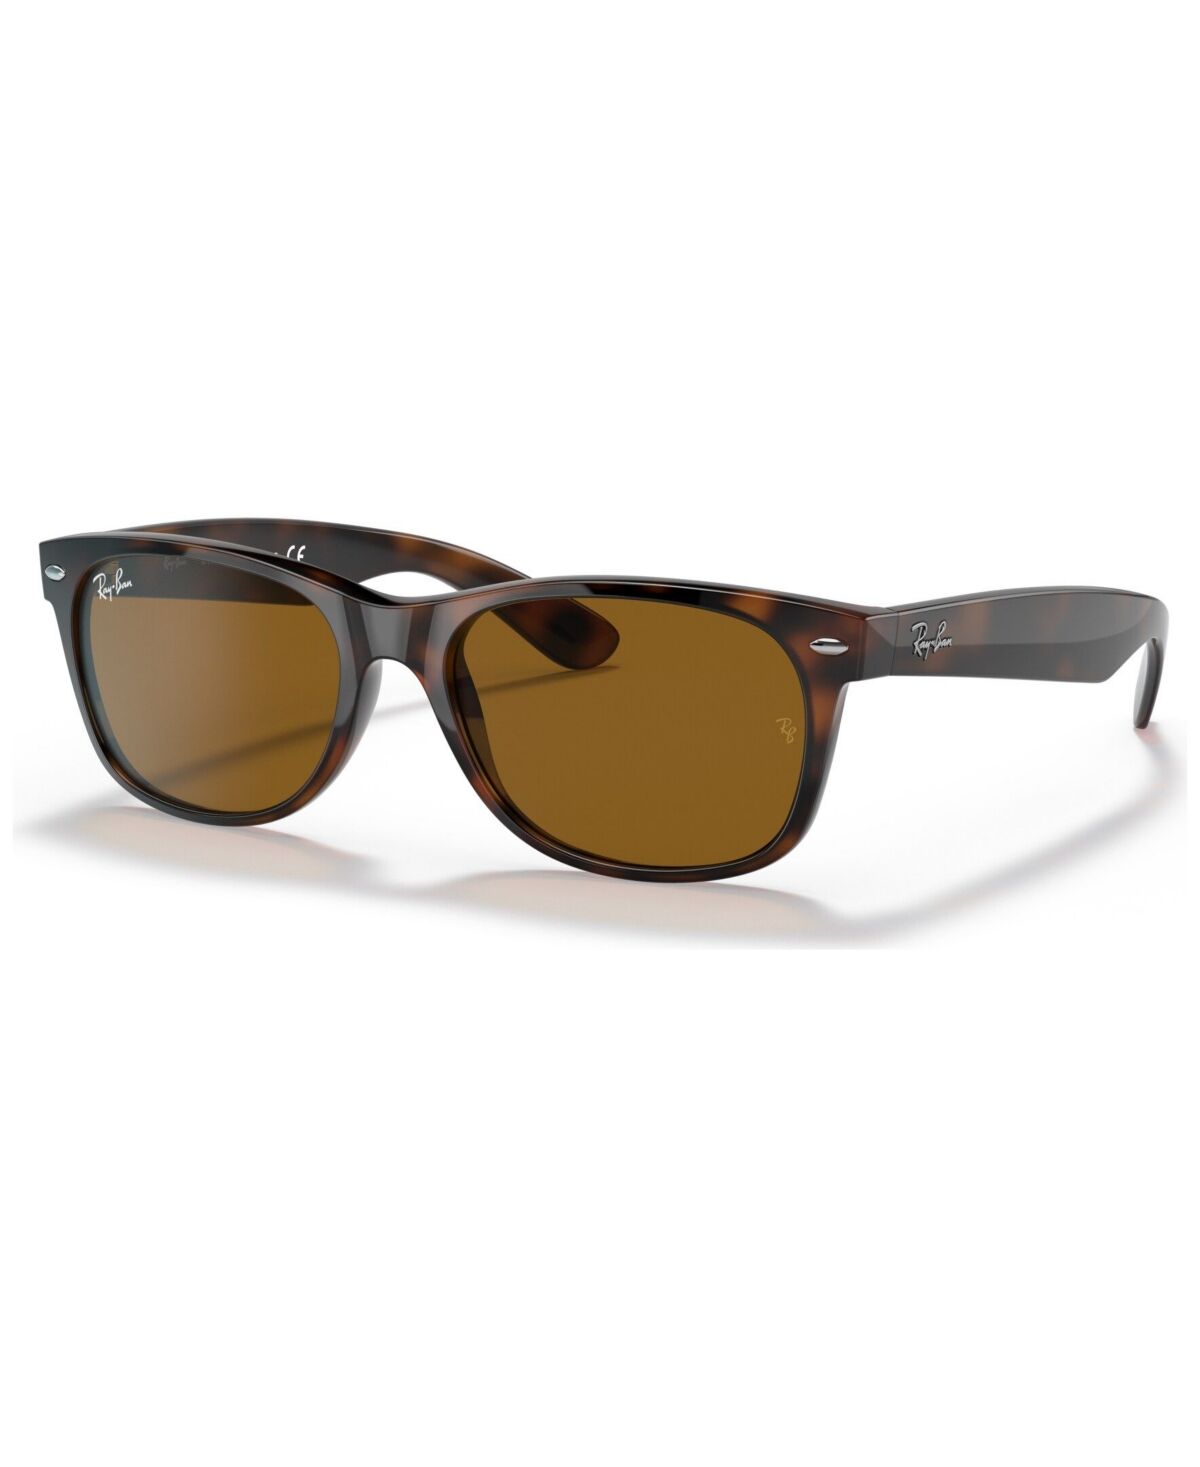 Ray-Ban Sunglasses, RB2132 New Wayfarer - Tortoise Brown